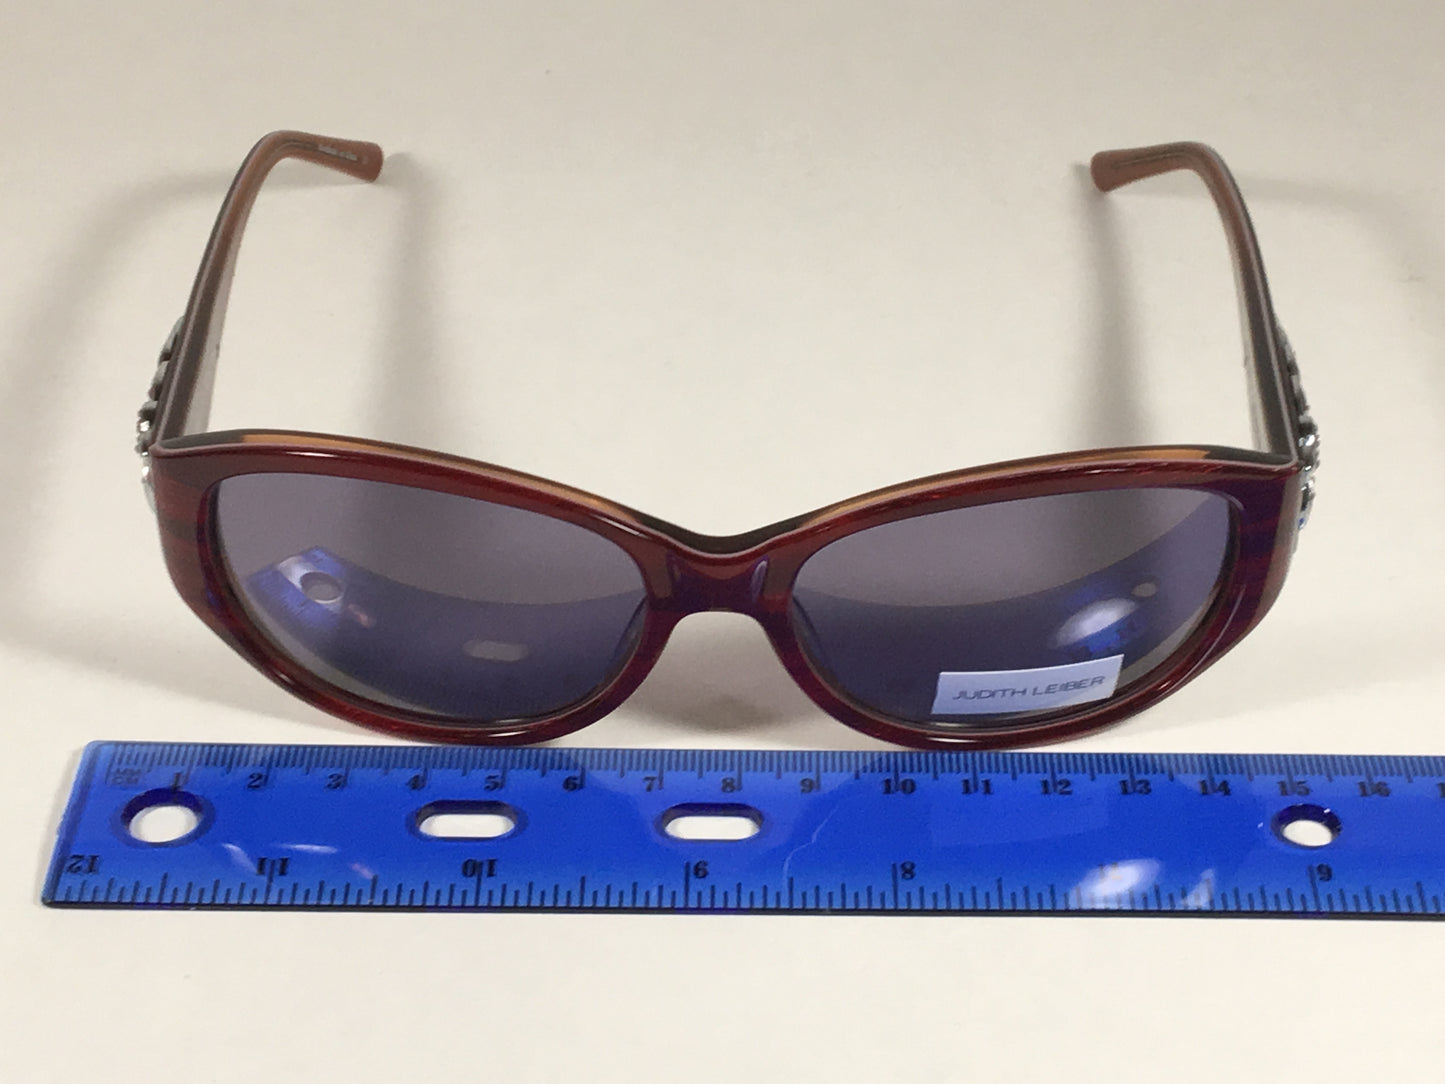 Judith Leiber Handmade Designer Sunglasses Ruby Wood Gray Lens Jl5002 06 - Sunglasses